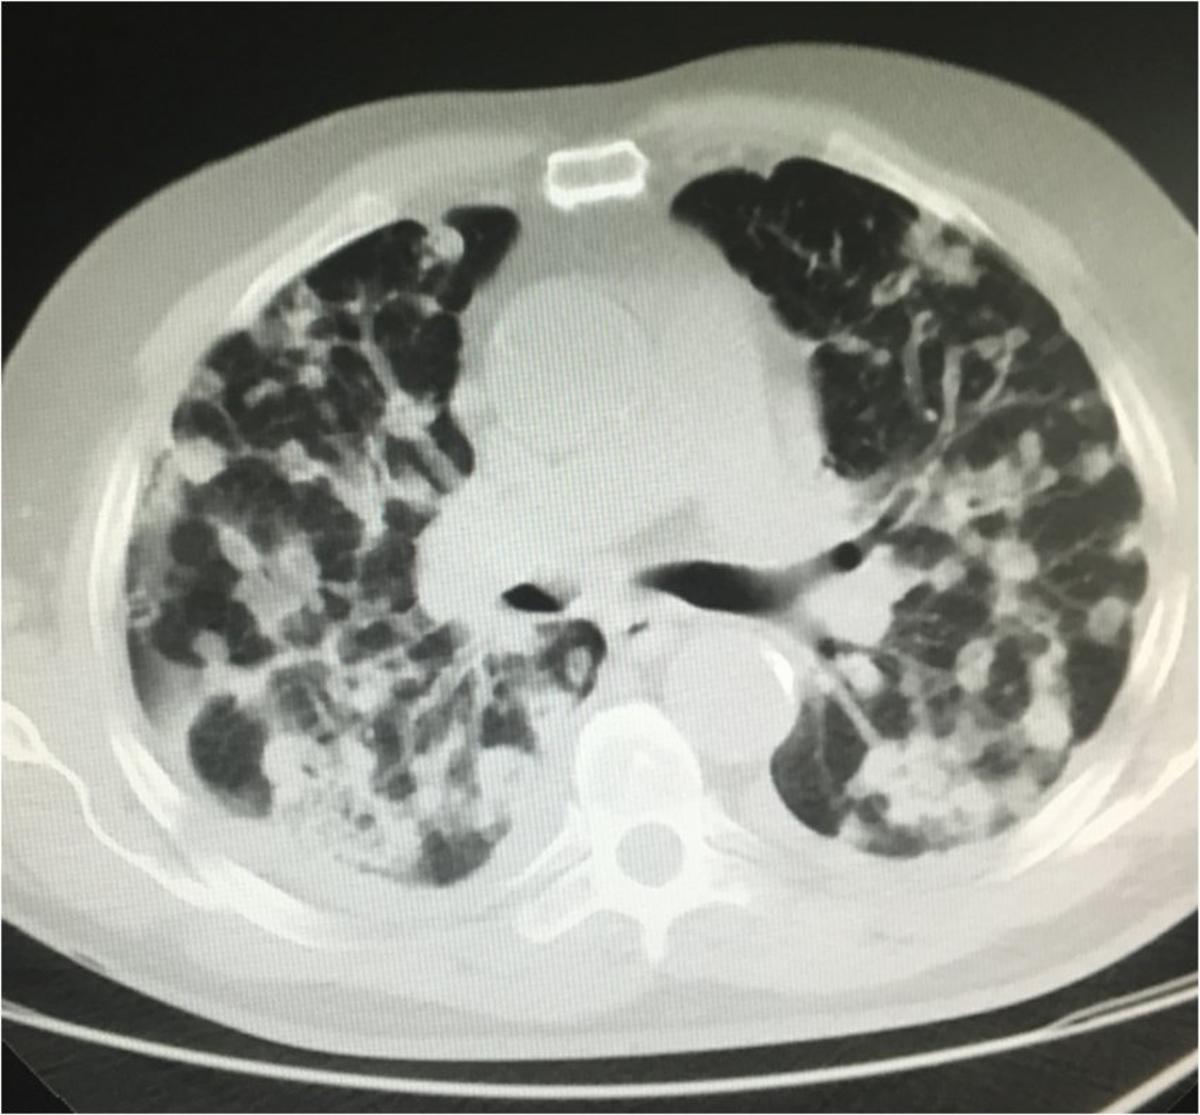 cancer-pulmon